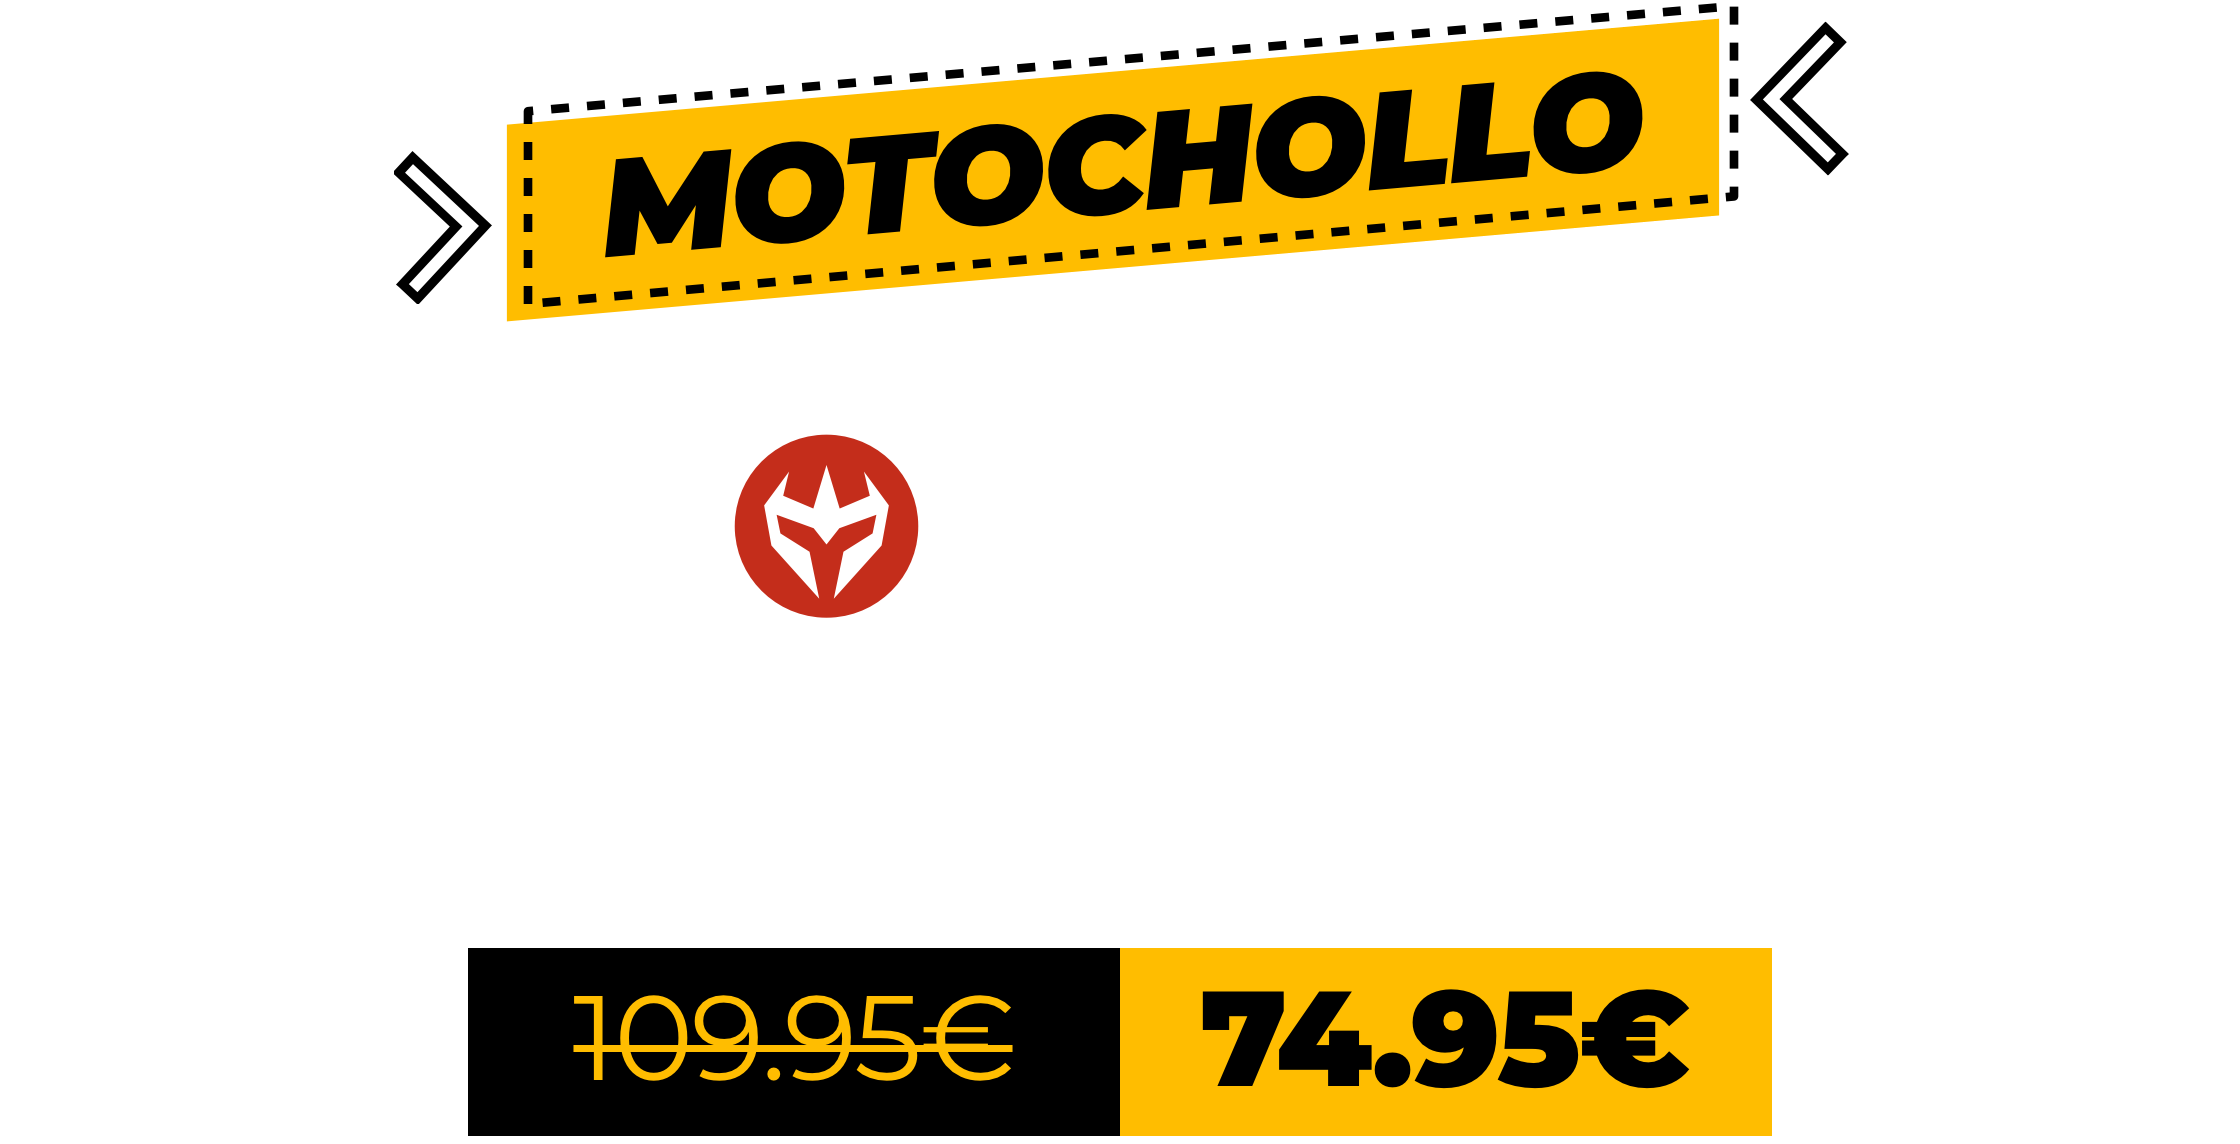 Motocard - armure rupert blue pants